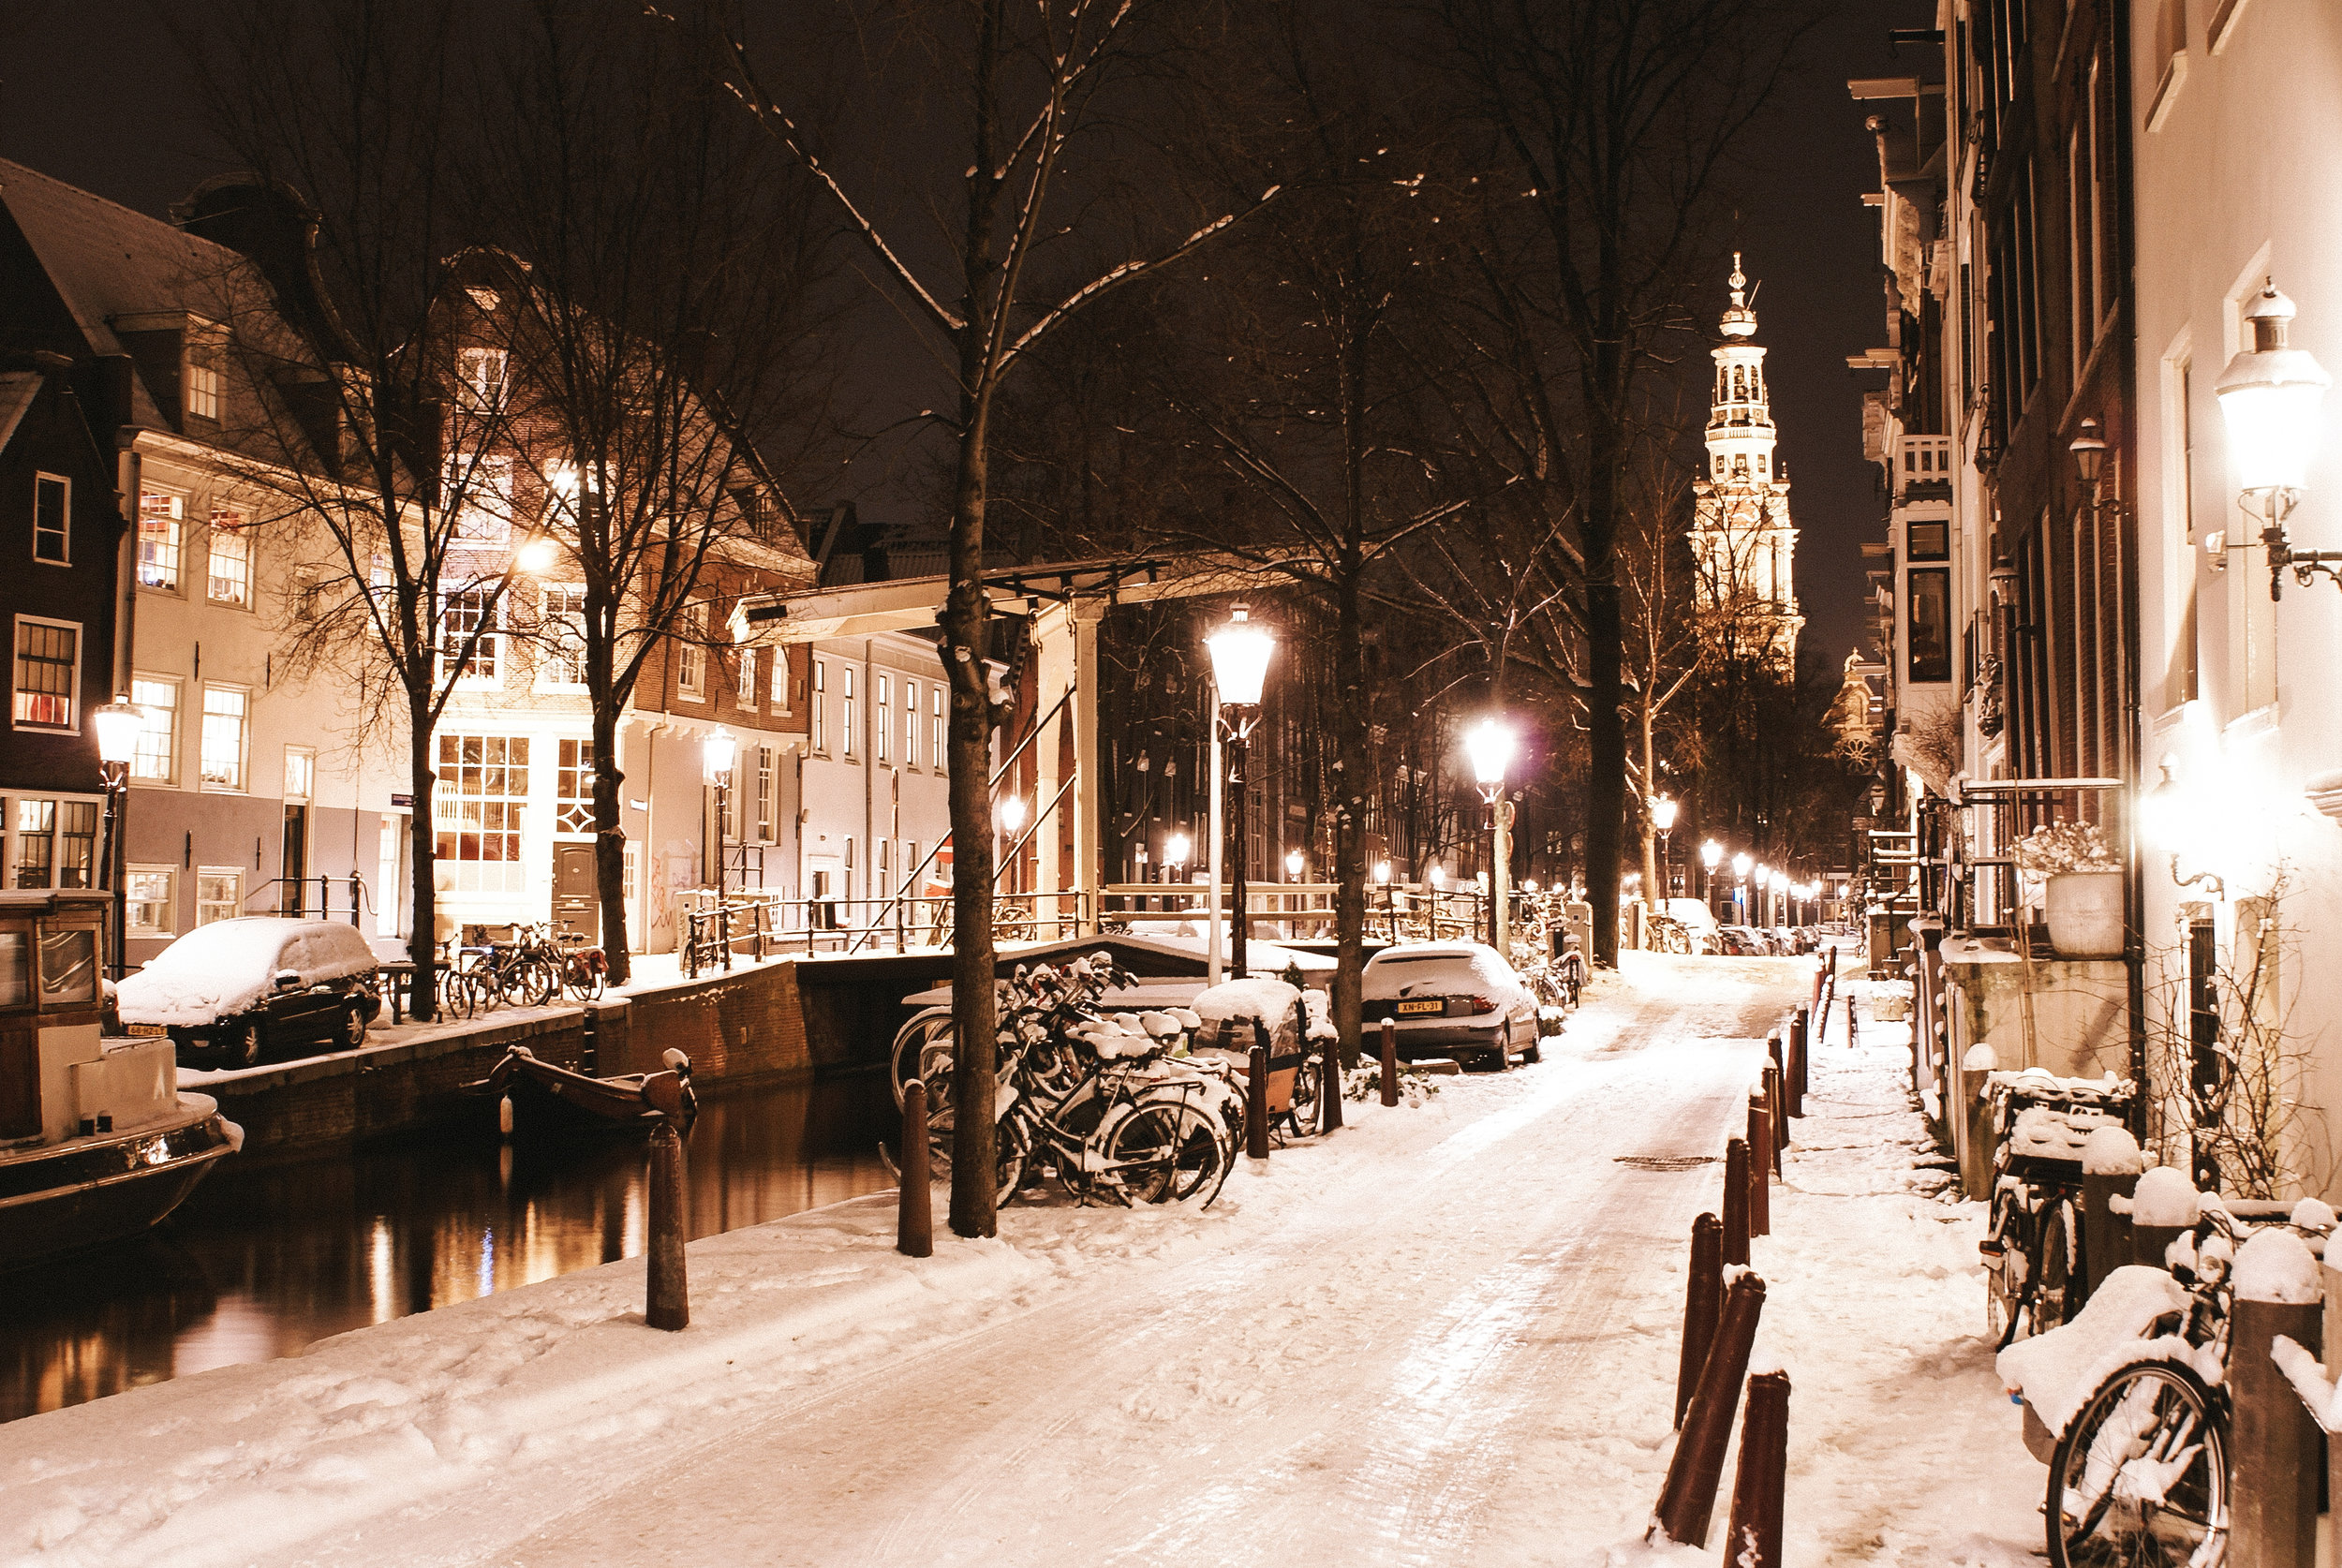 Amsterdam Snow 05 by Andra Stefan - Amsterdamming.jpg